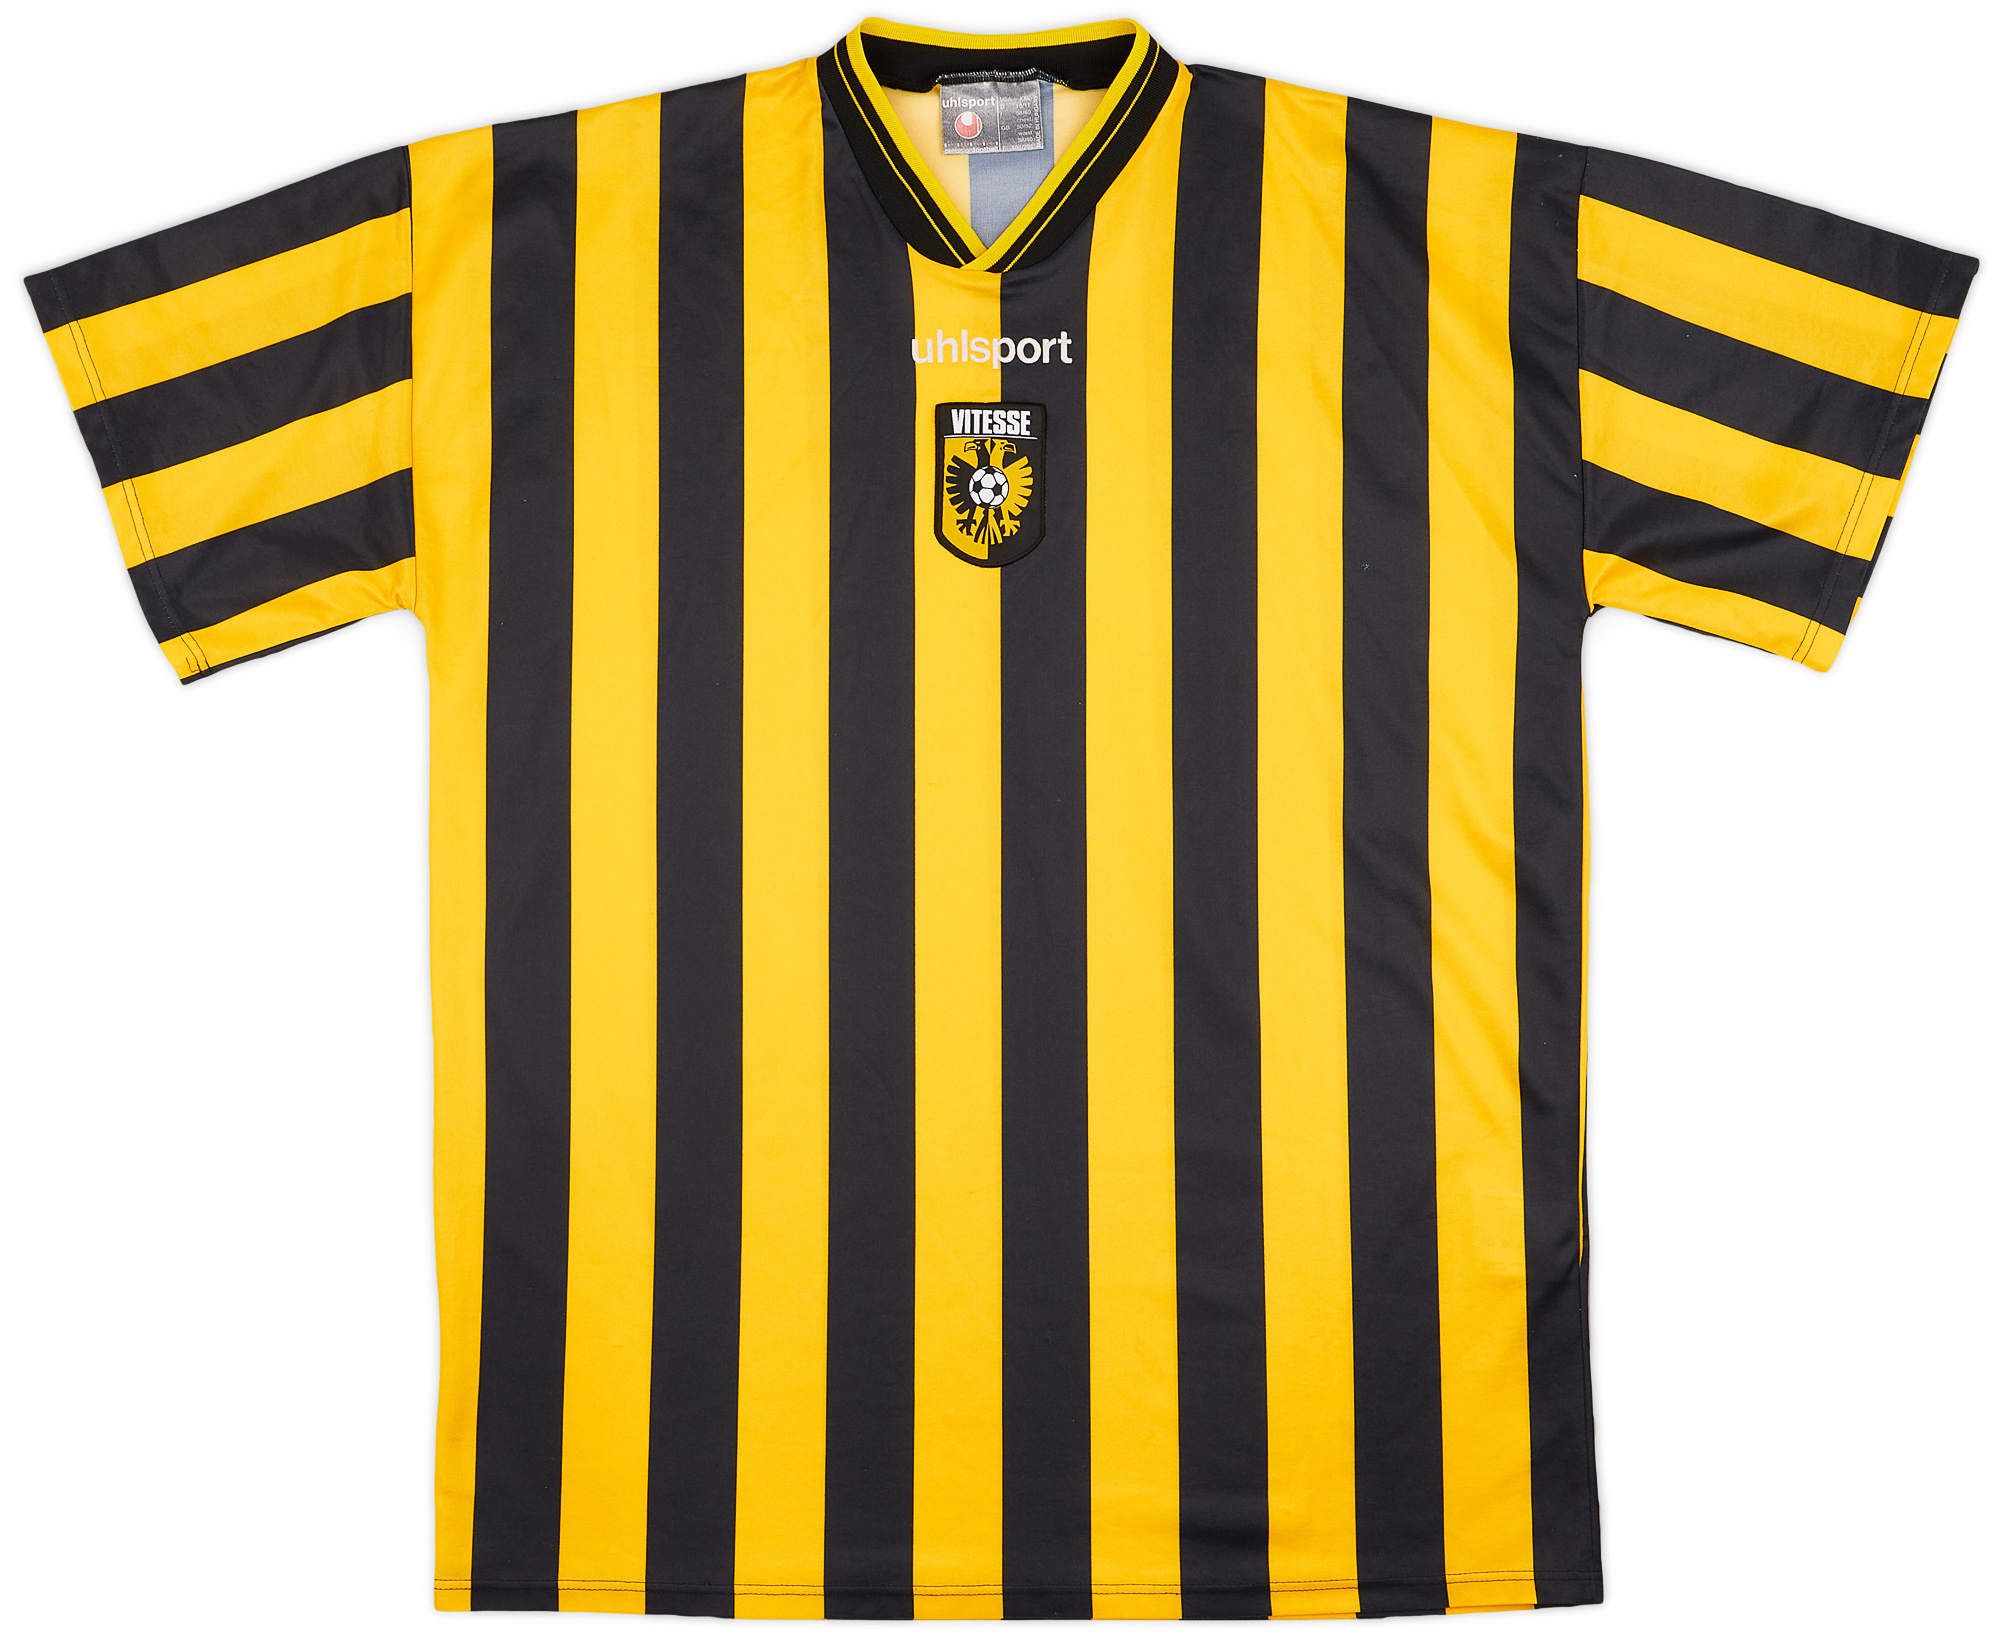 2001-02 Vitesse Home Shirt - 9/10 - ()